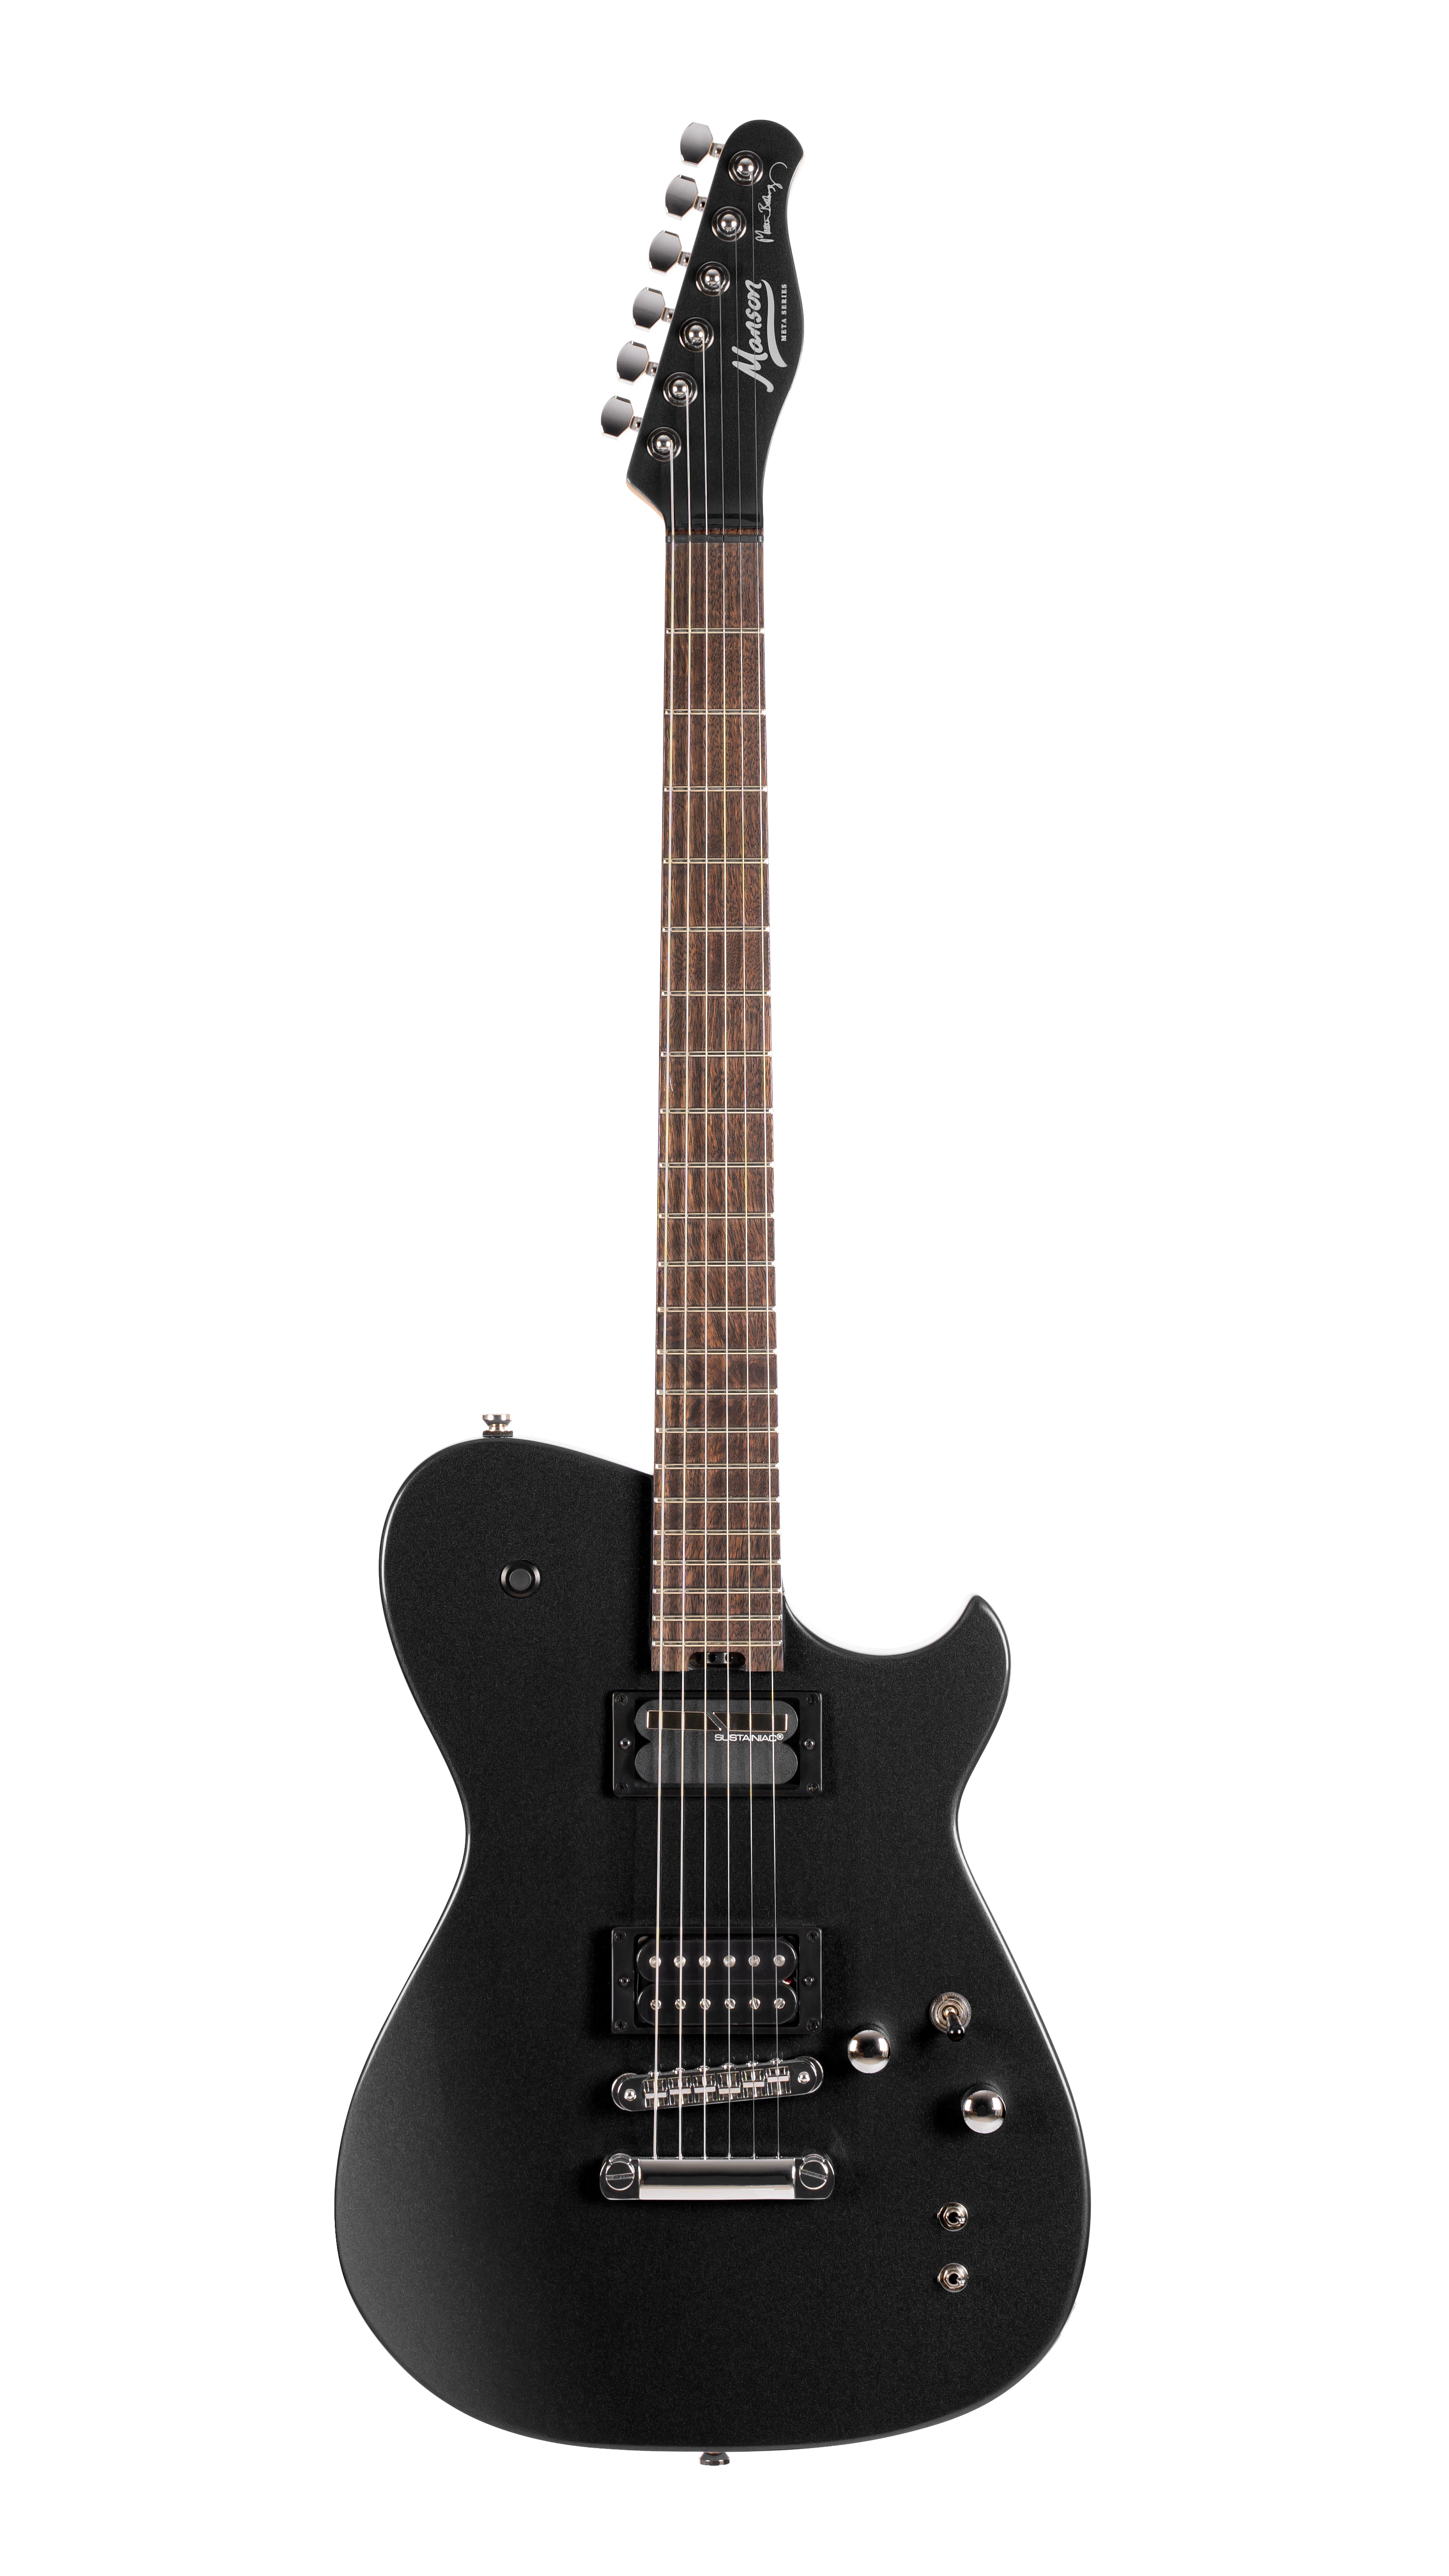 Manson Meta Series MBM-2H-Sustaniac Satin Black, Electric Guitar for sale at Richards Guitars.